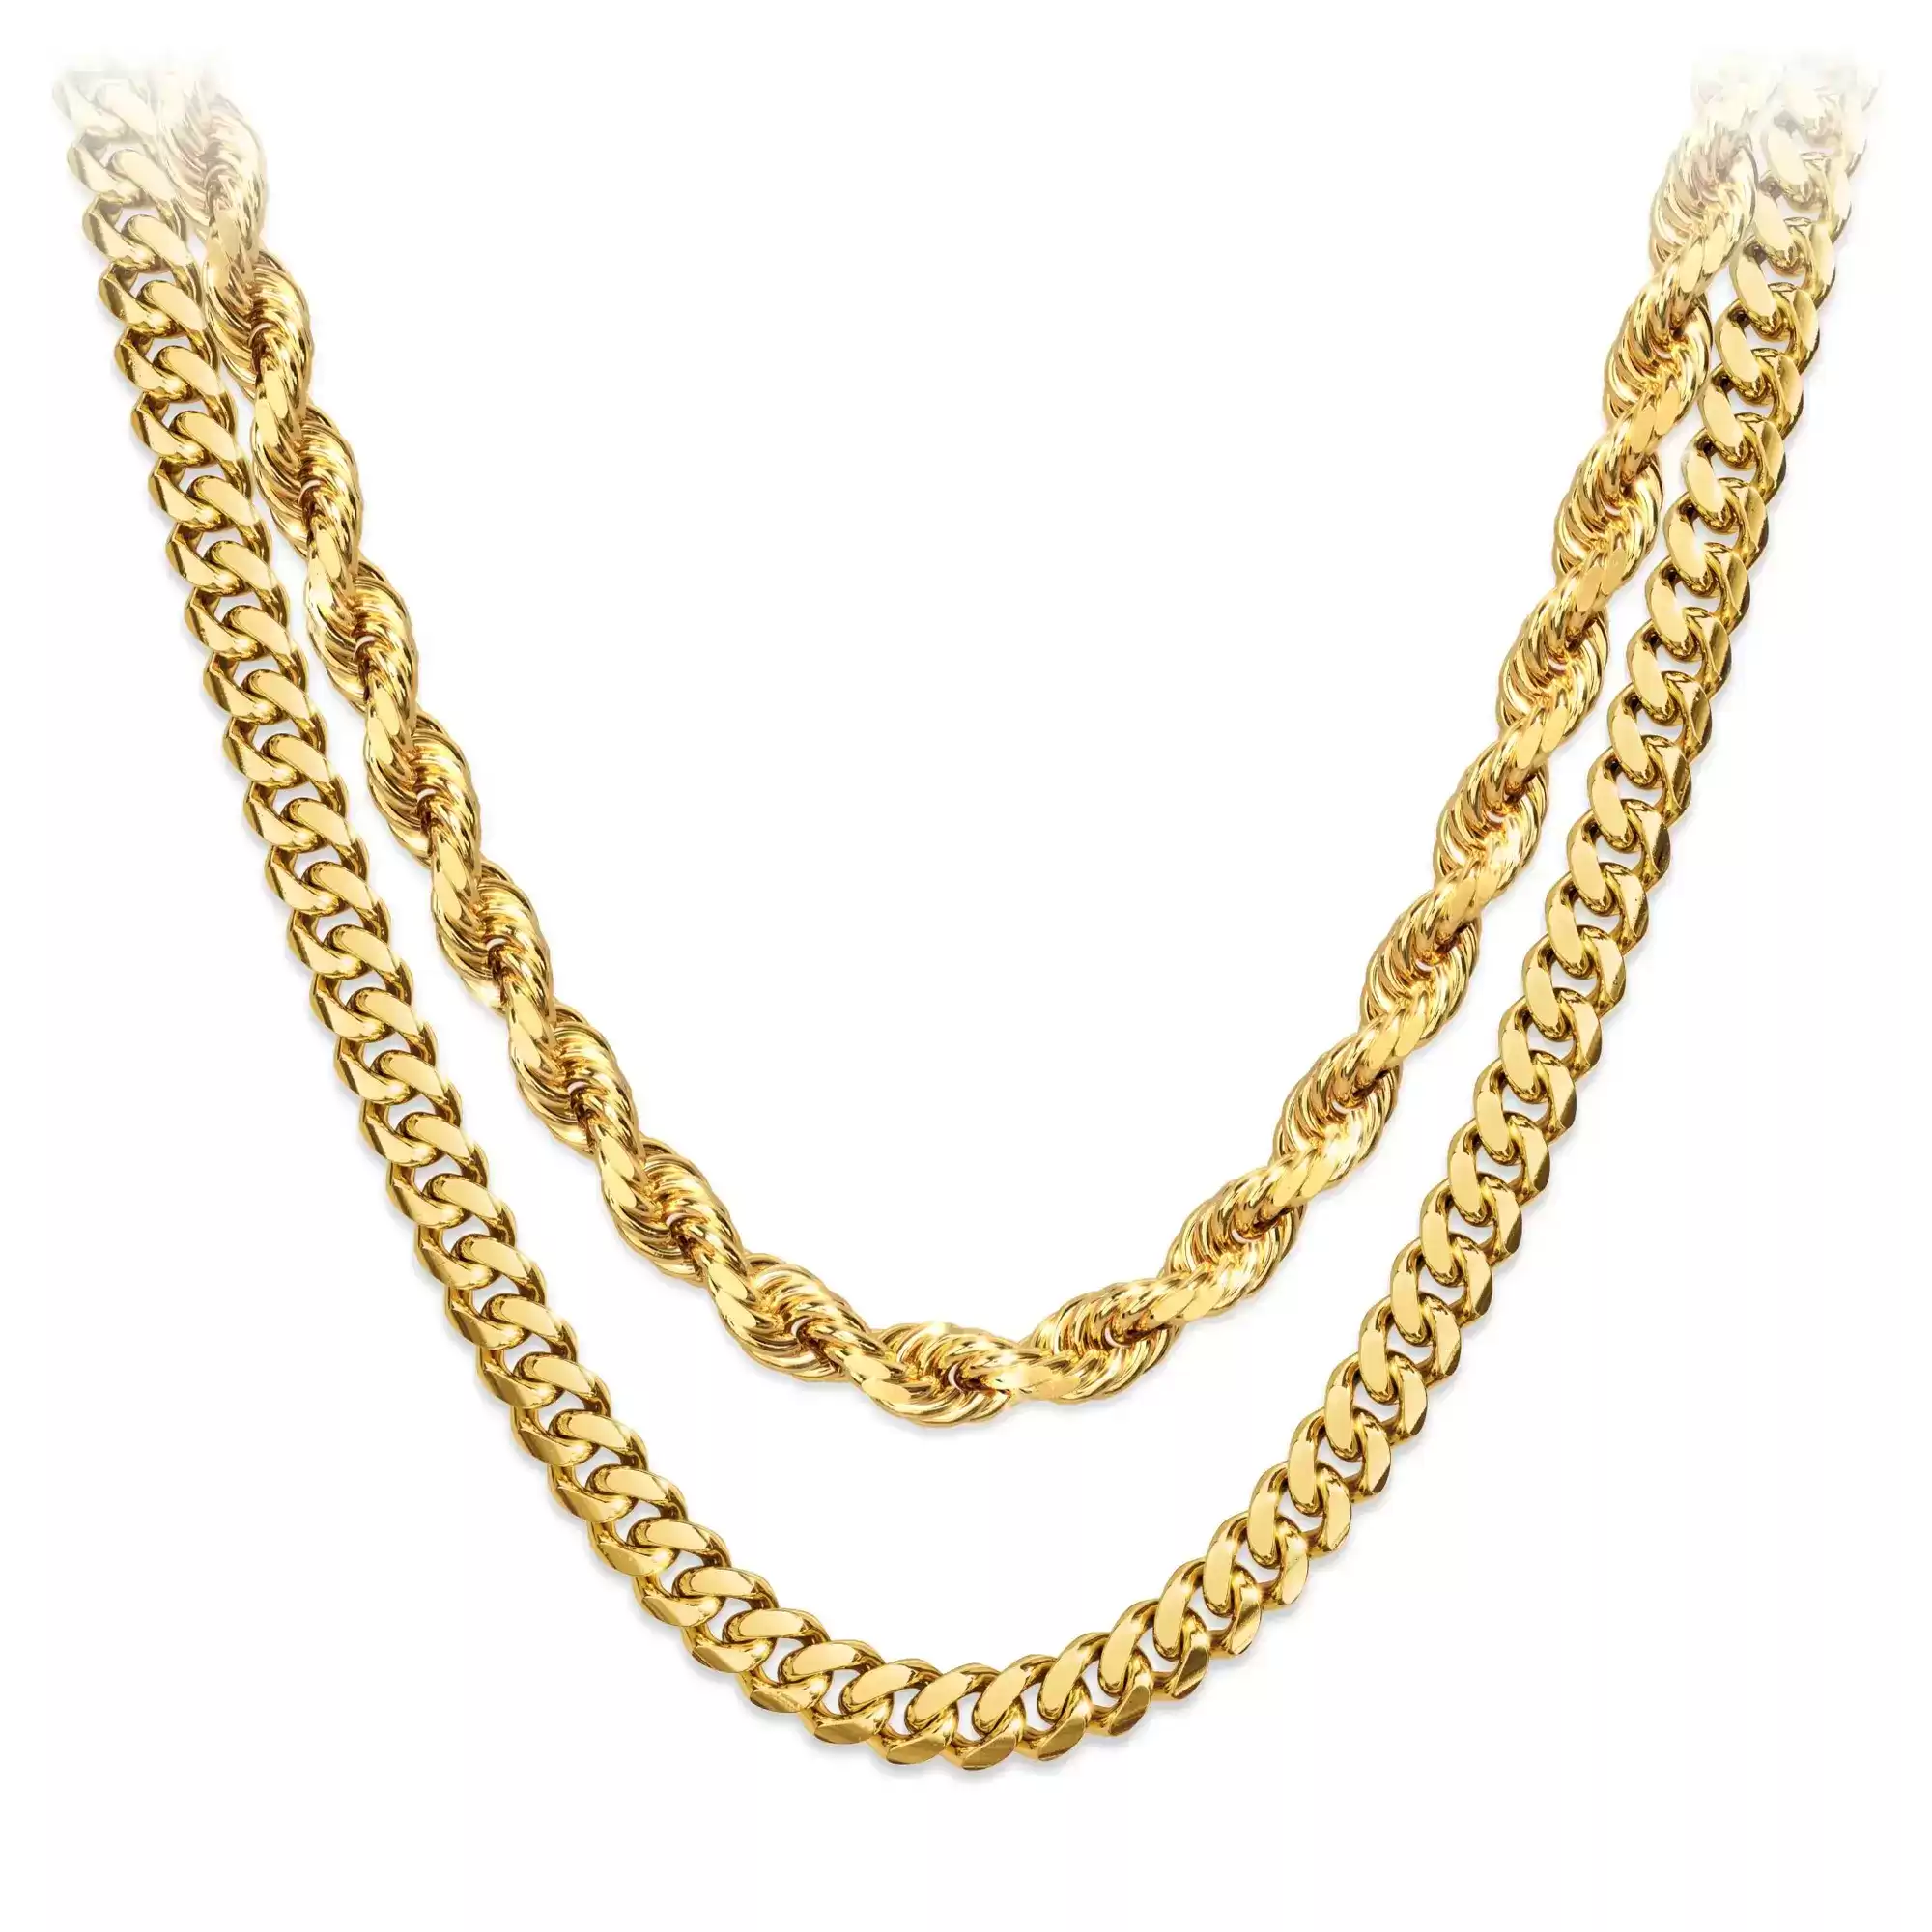 Jaxxon Rope + Cuban Gold Necklace Pair